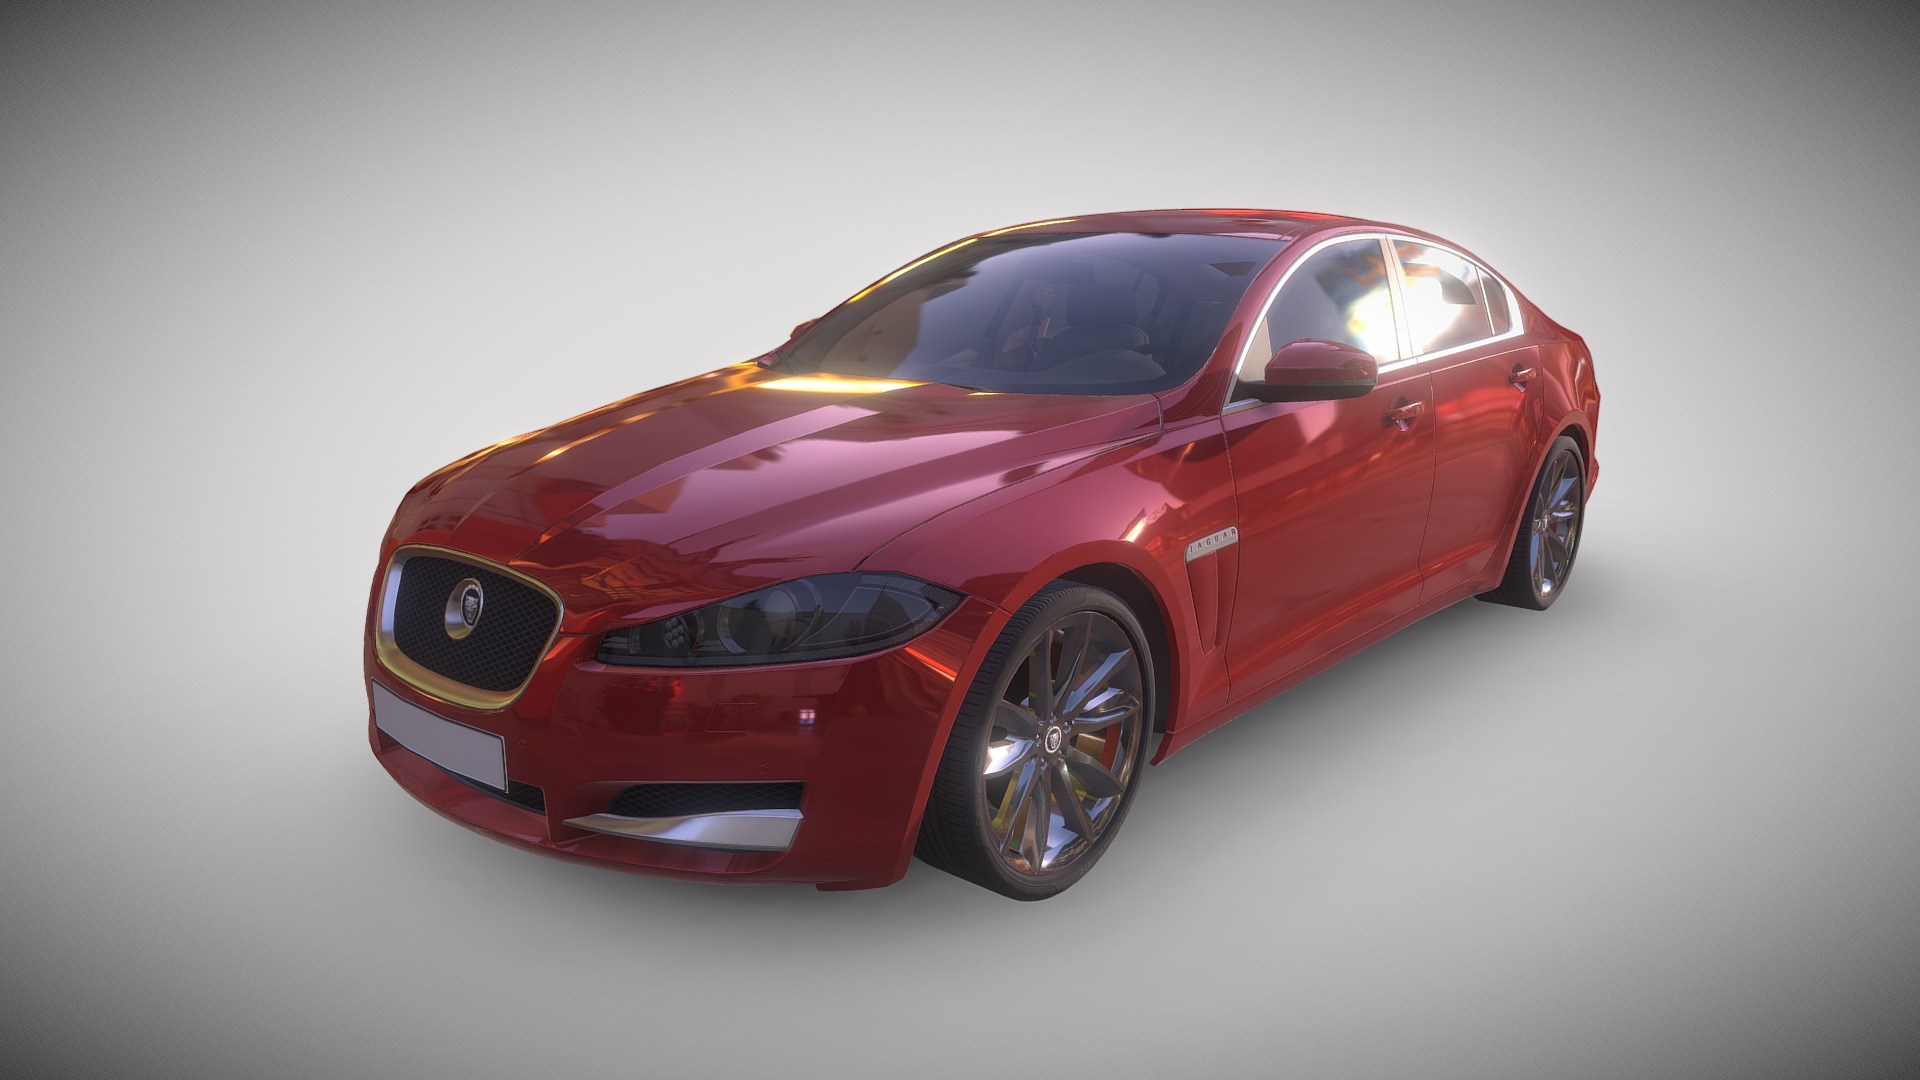 3D model Jaguar Luxurycar Model - This is a 3D model of the Jaguar Luxurycar Model. The 3D model is about a red sports car.